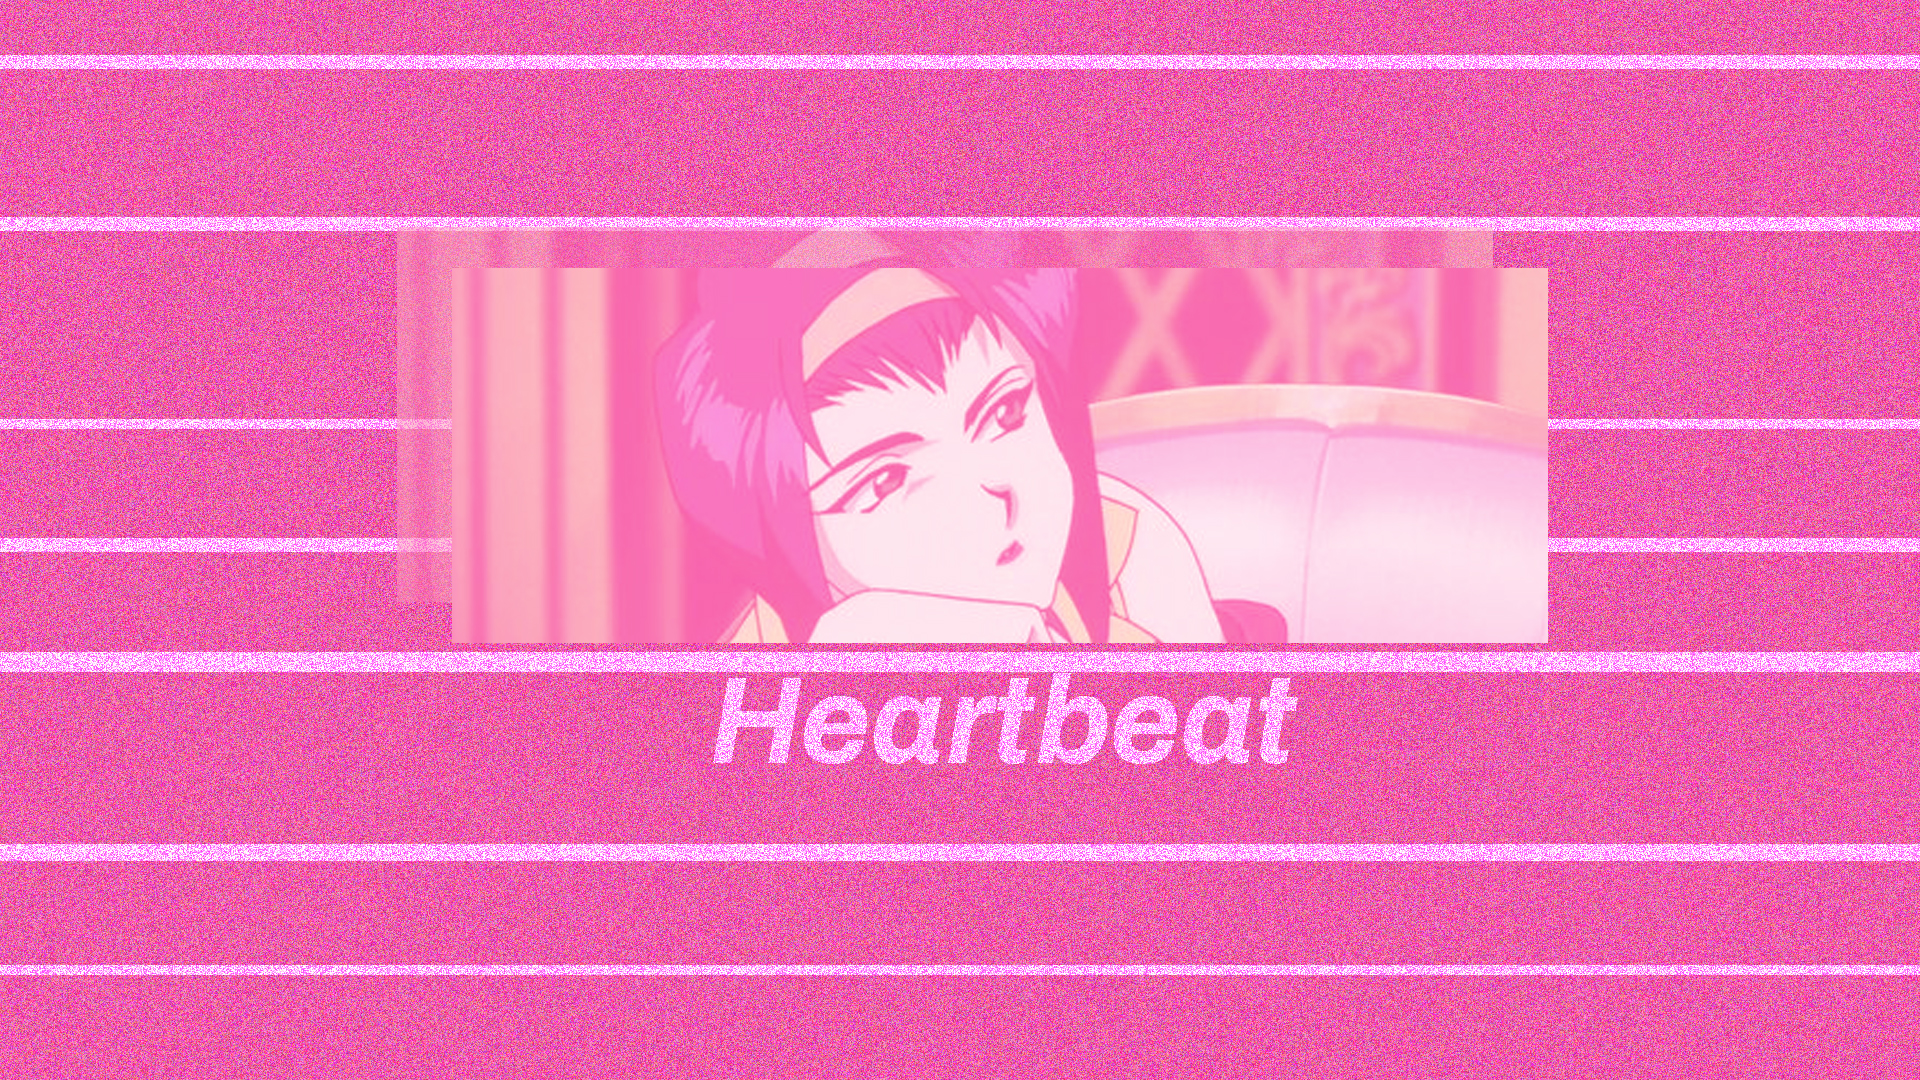 Heartbeat Pink Vaporwave 1920x1080